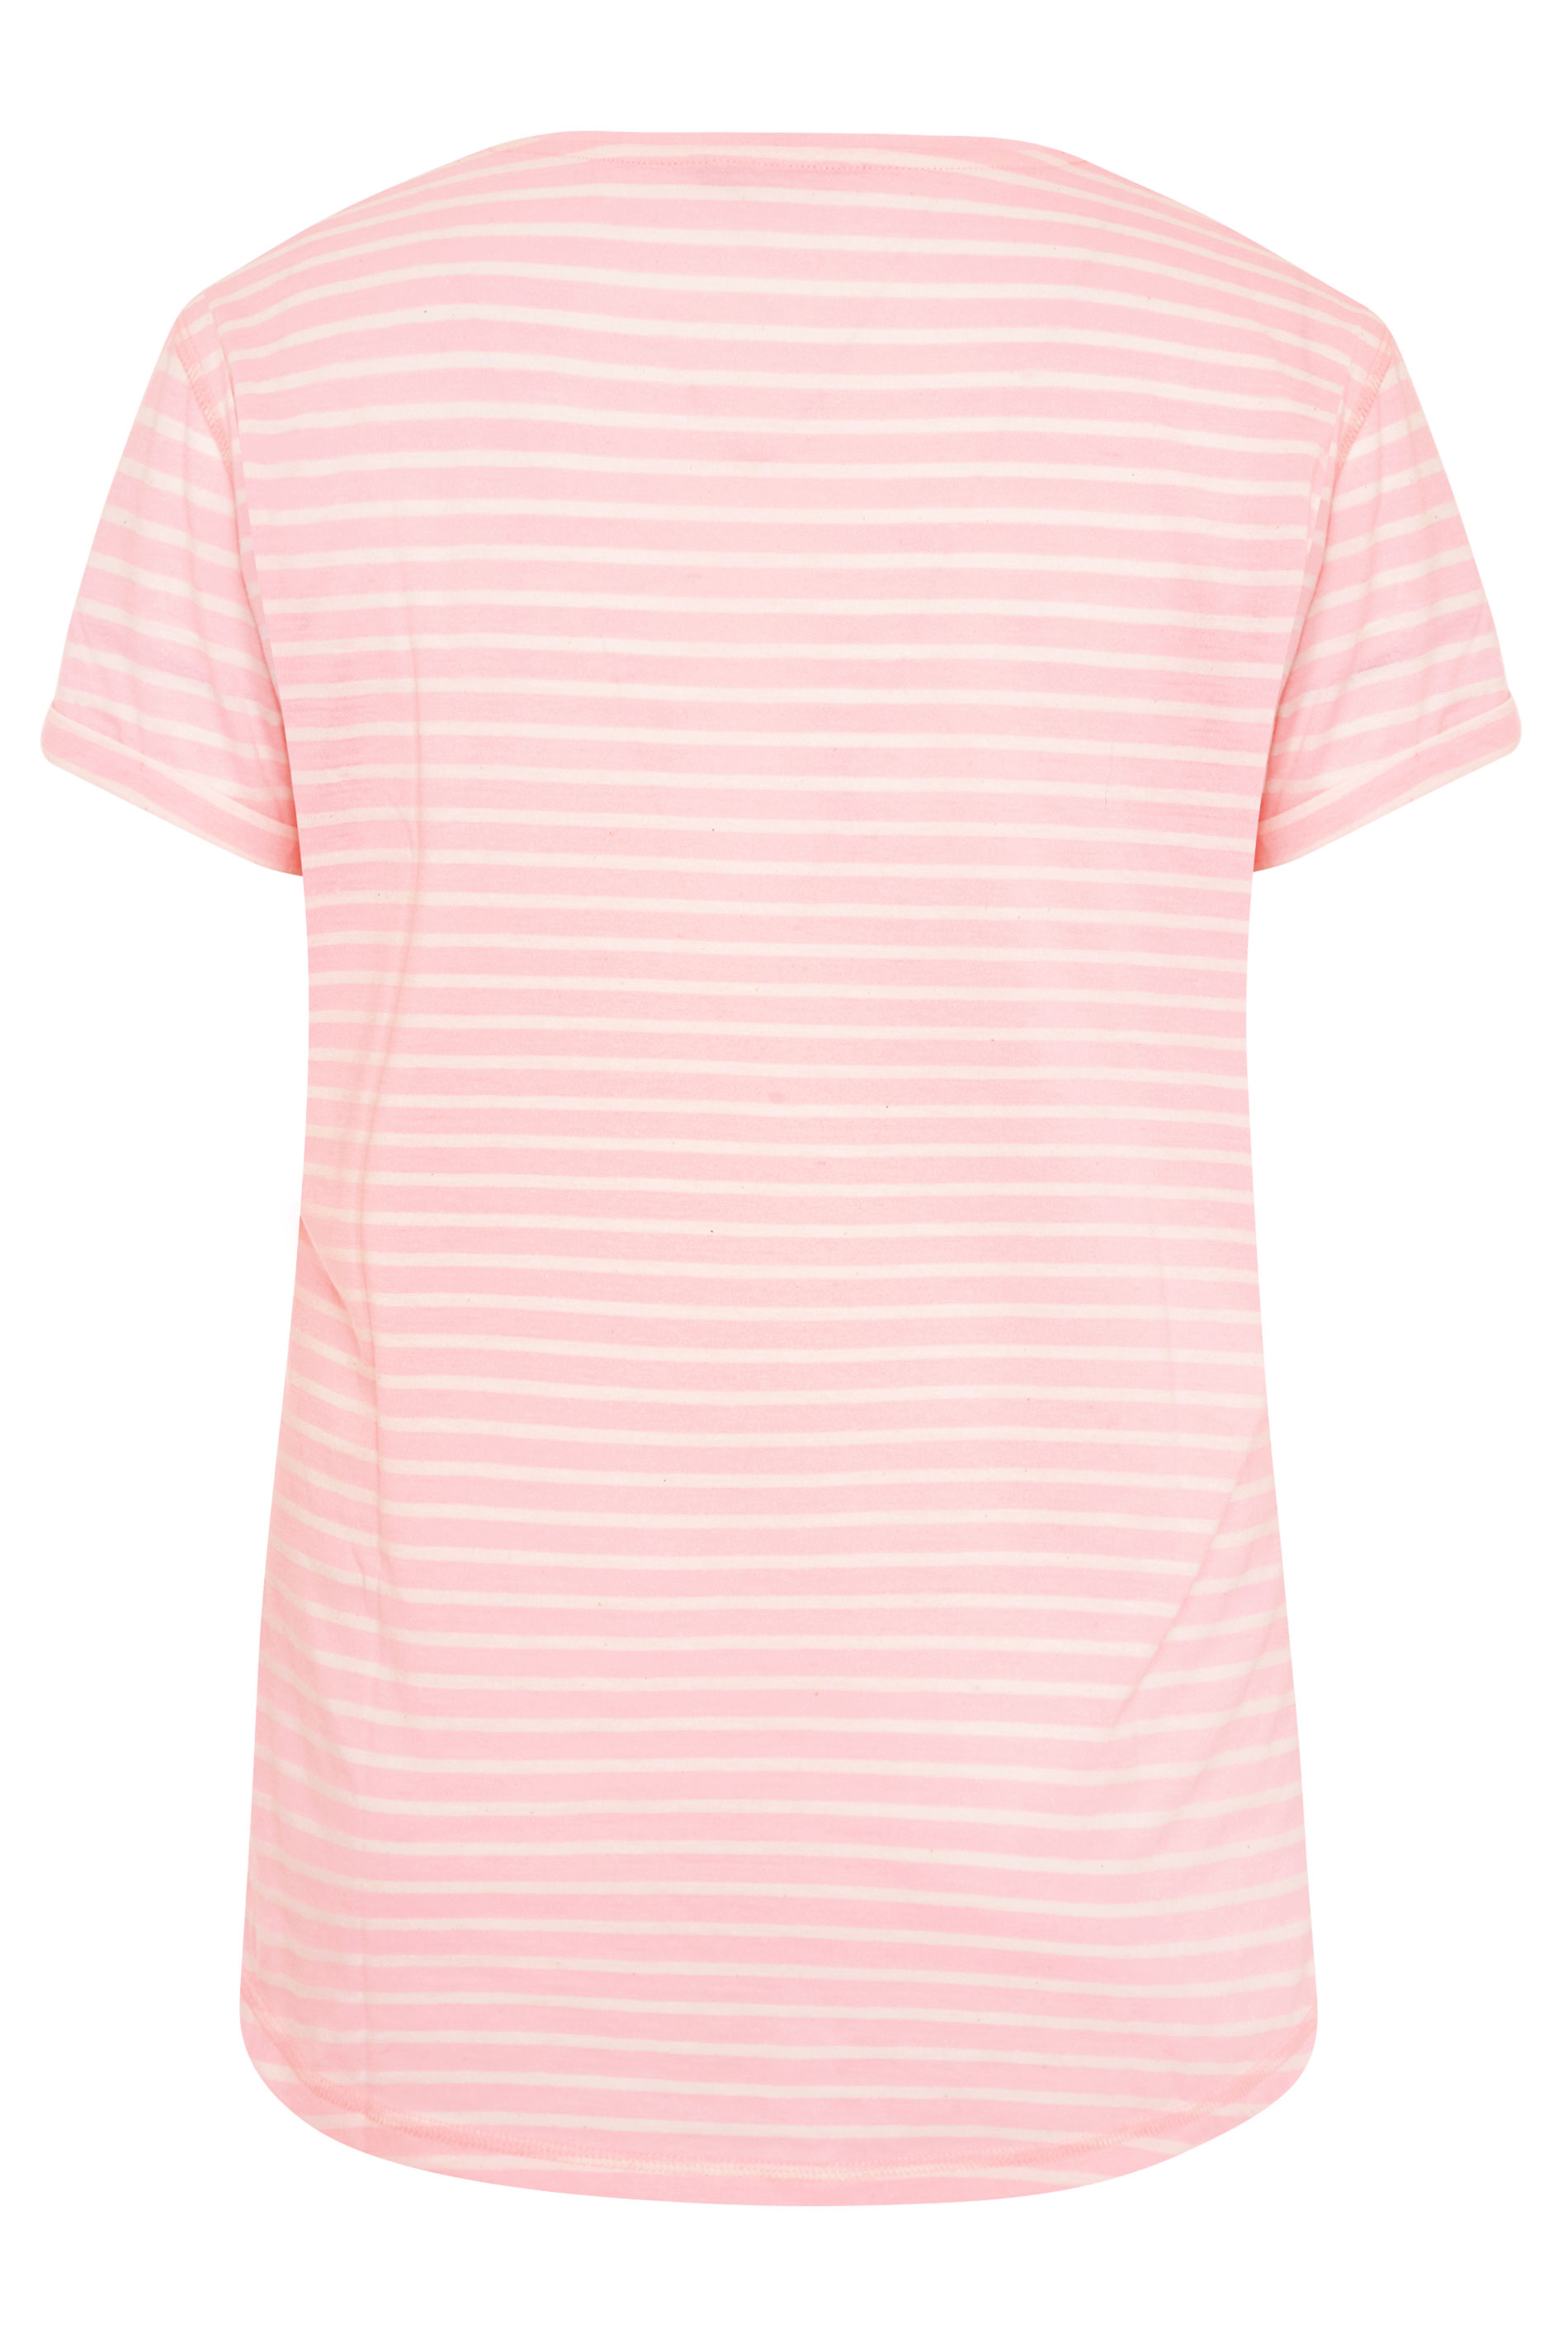 Grande taille  Tops Grande taille  T-Shirts | T-Shirt Rose Basique Imprimé Rayures - HB21265